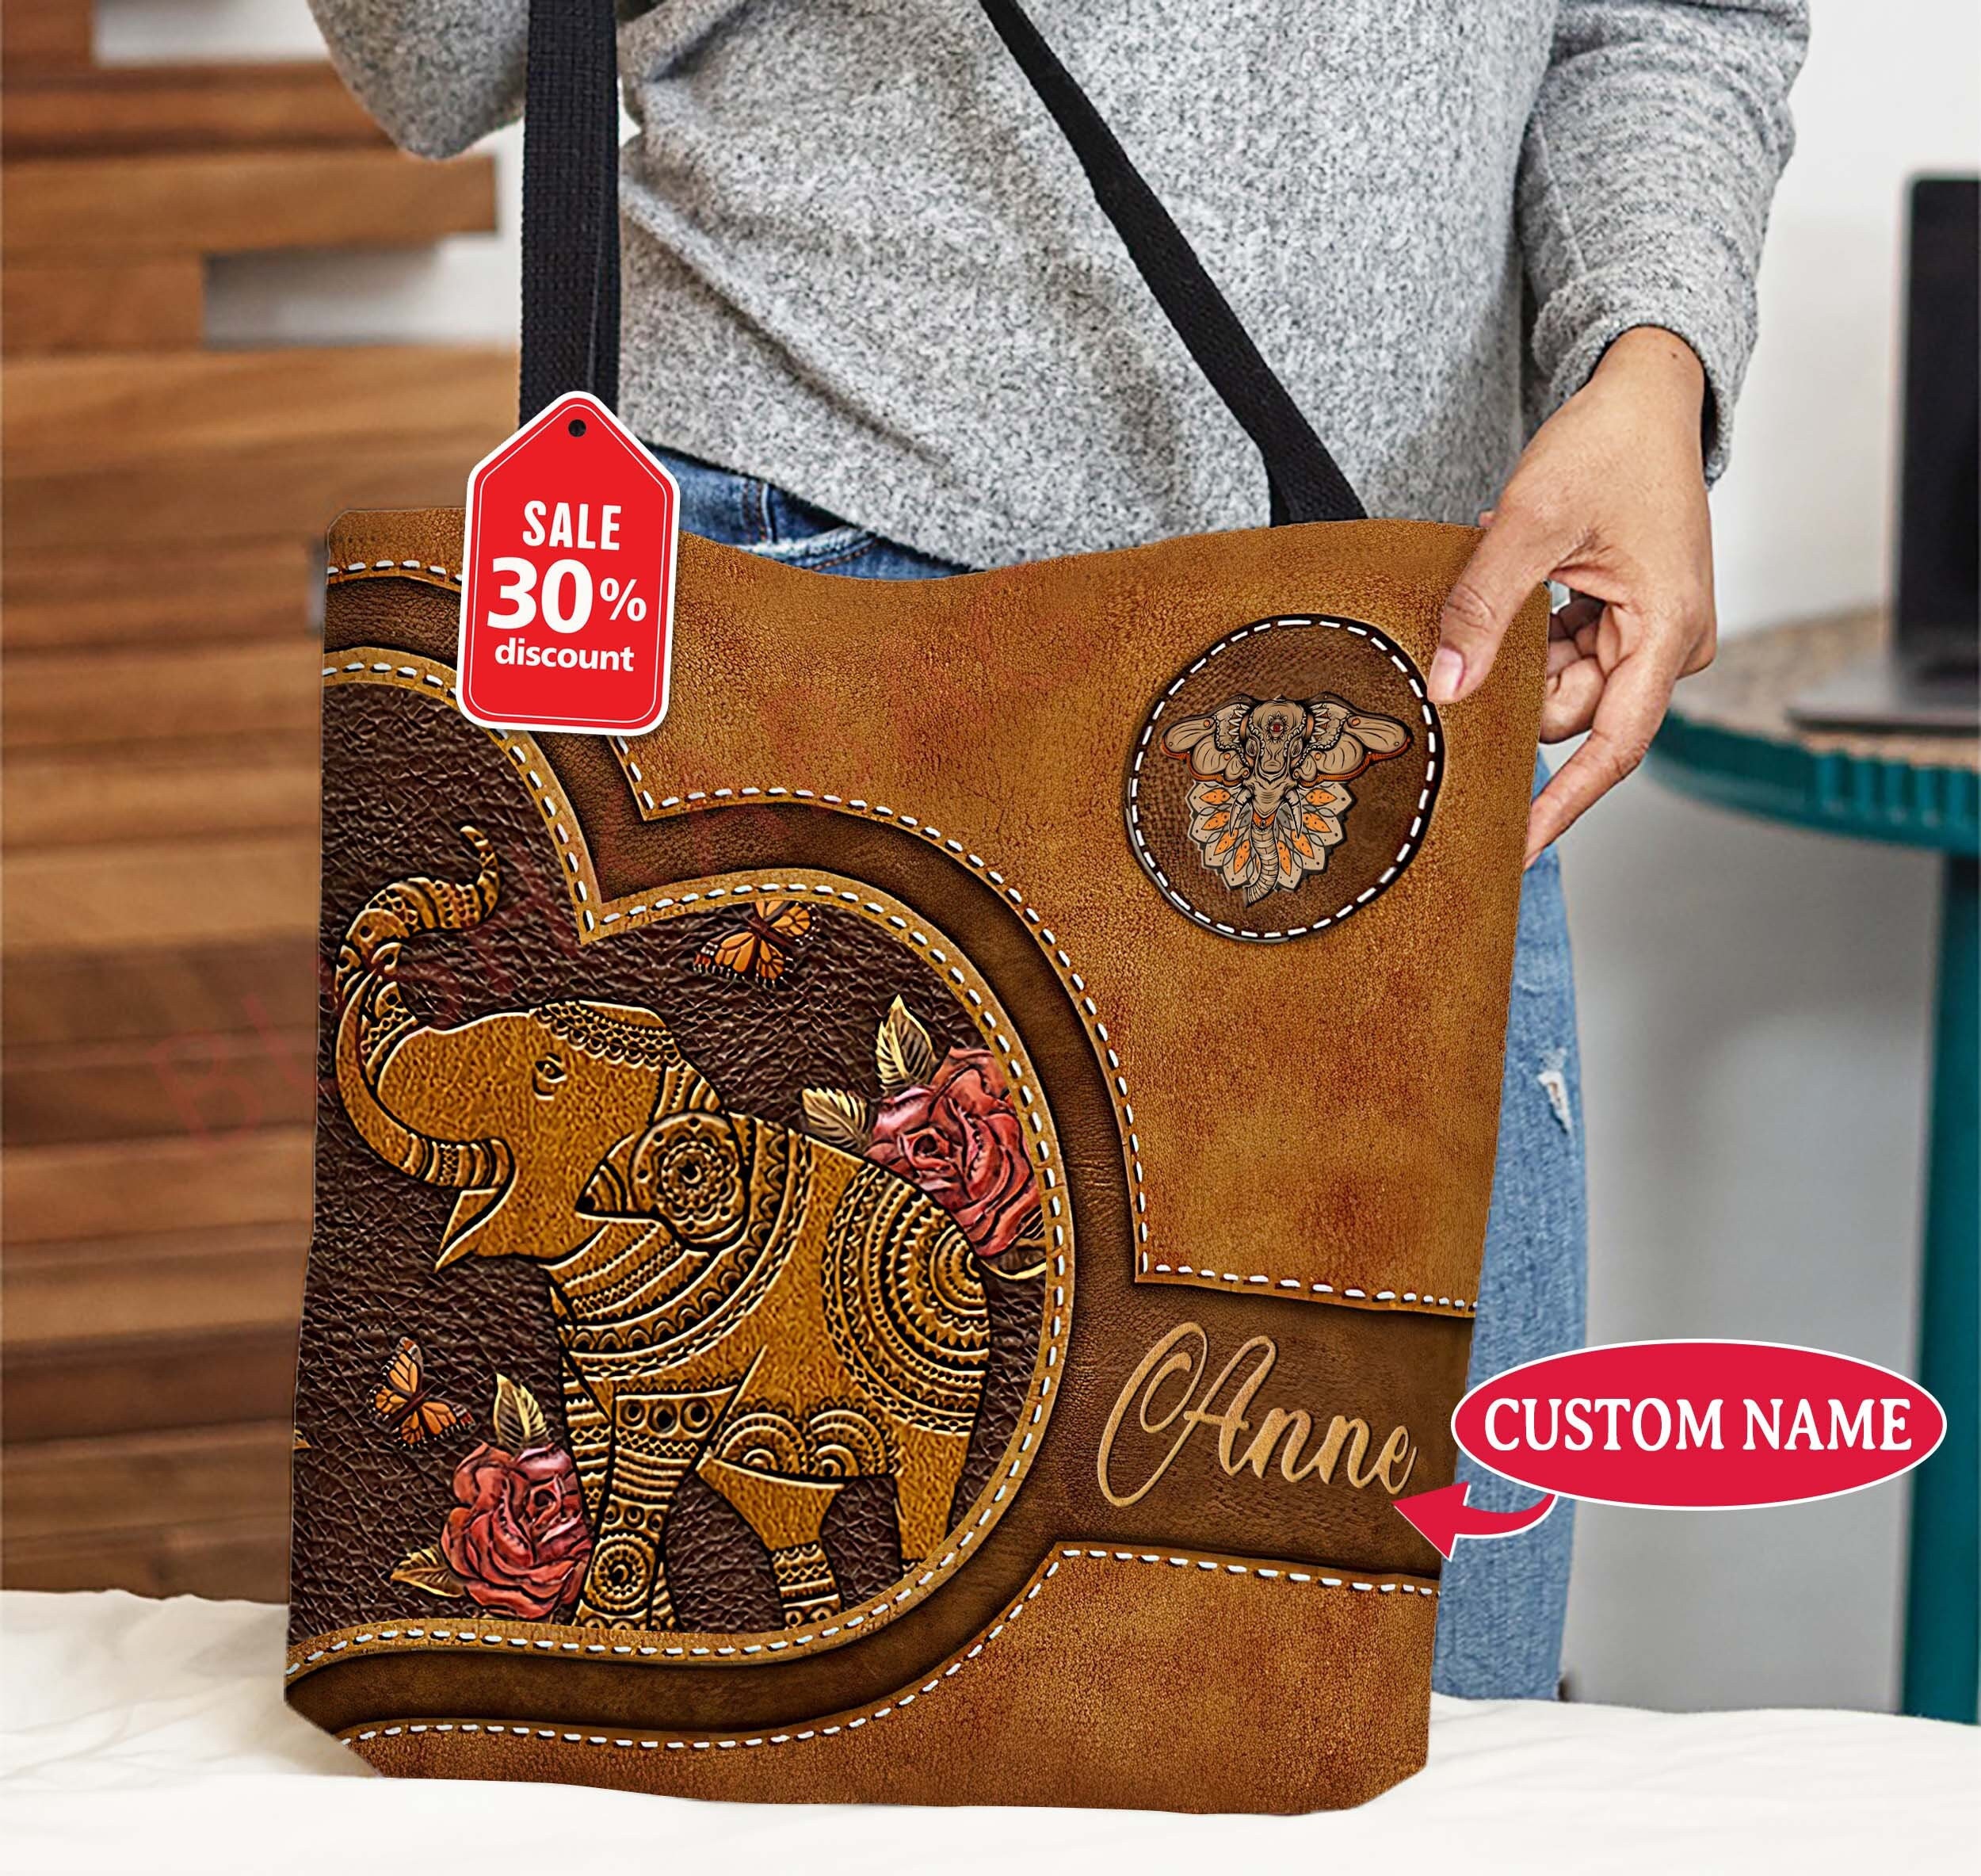 Thirty-One Elephant Print Handbags